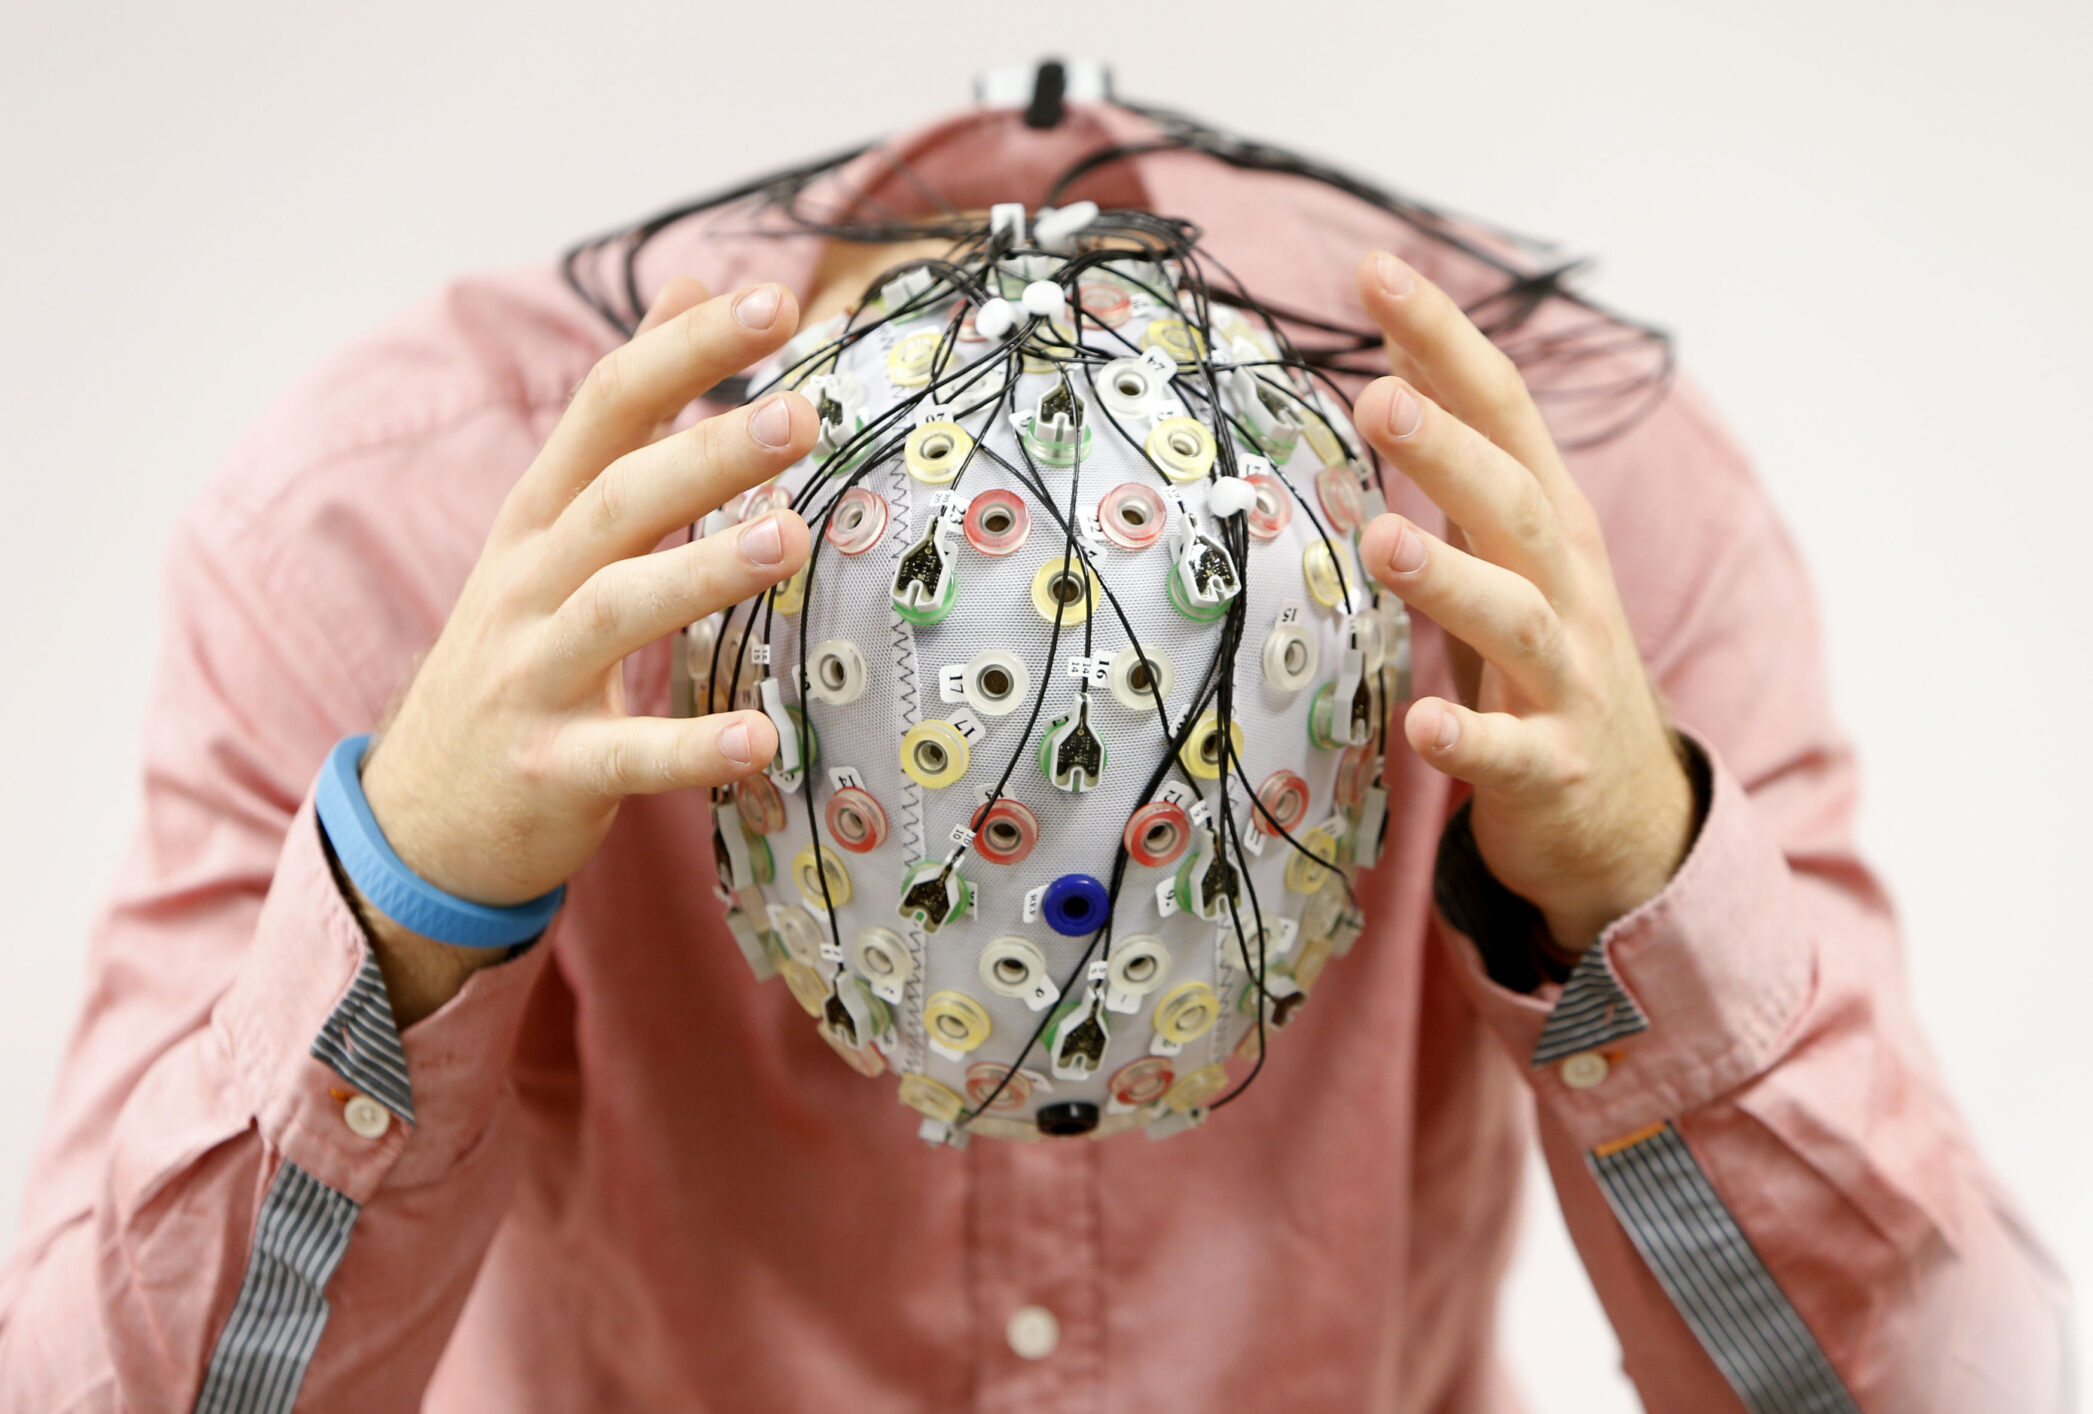 Advances In Brain Tech Spur Calls For 'Neuro-Rights'